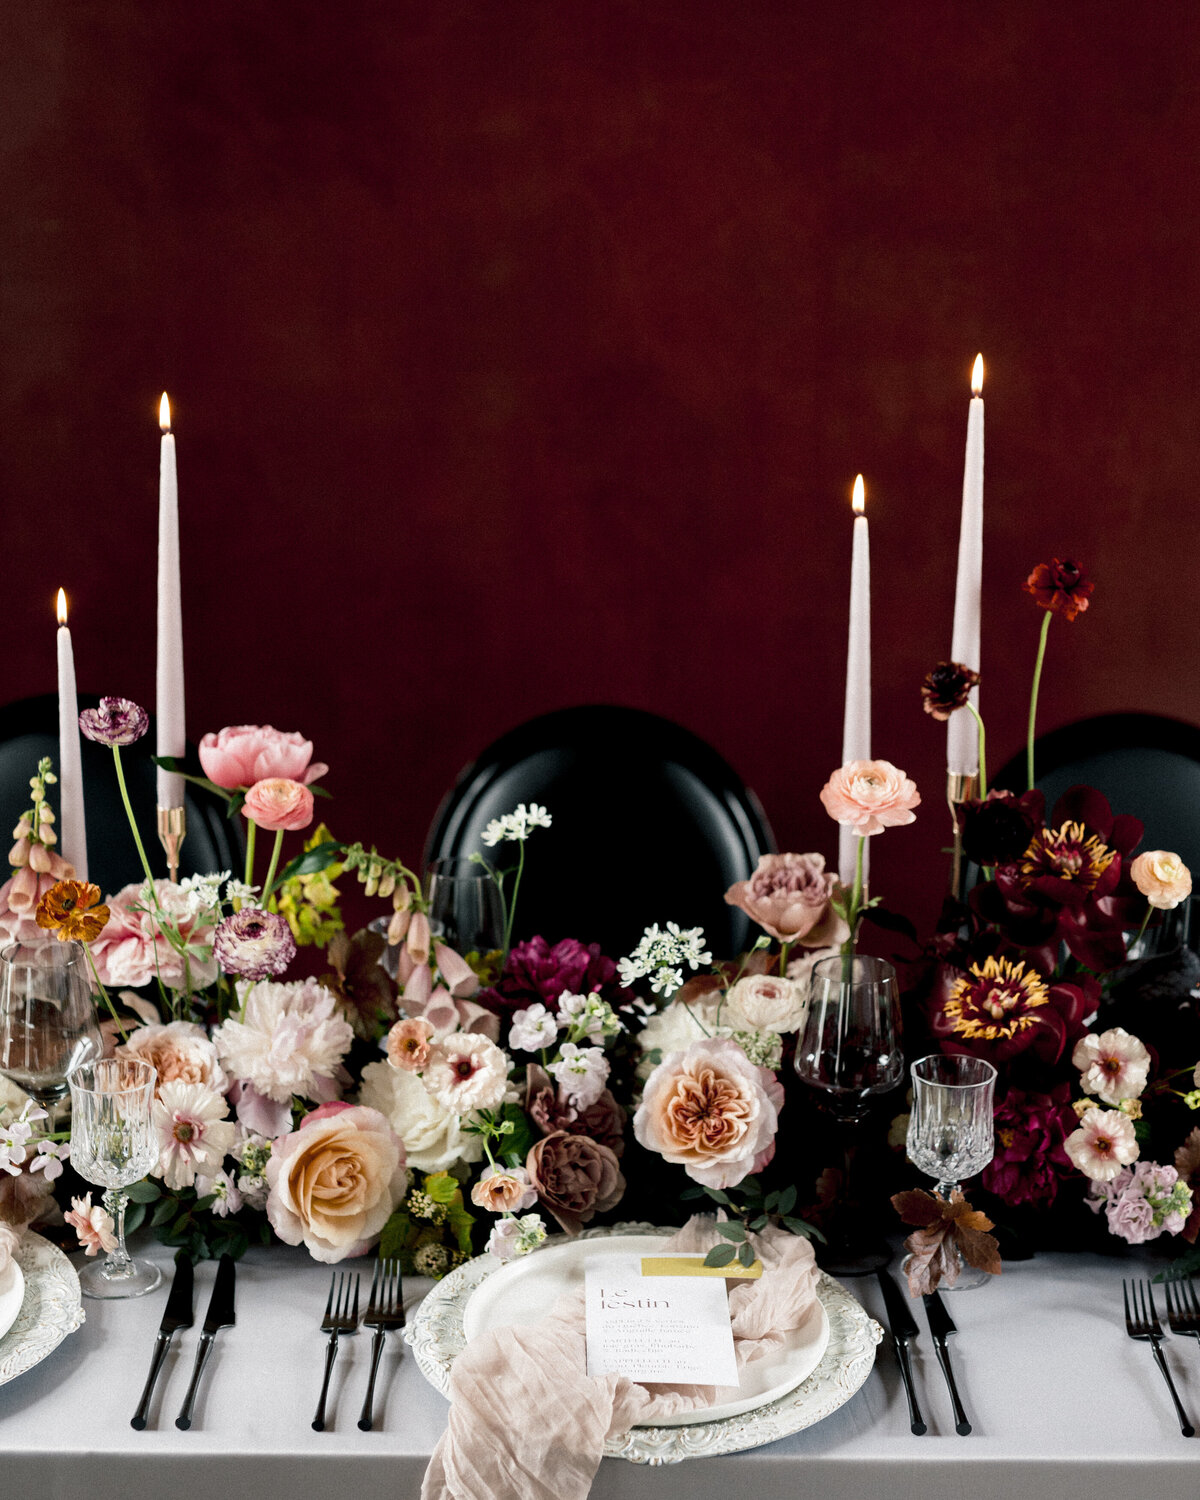 Atelier-Carmel-Wedding-Florist-GALLERY-Centerpieces-52